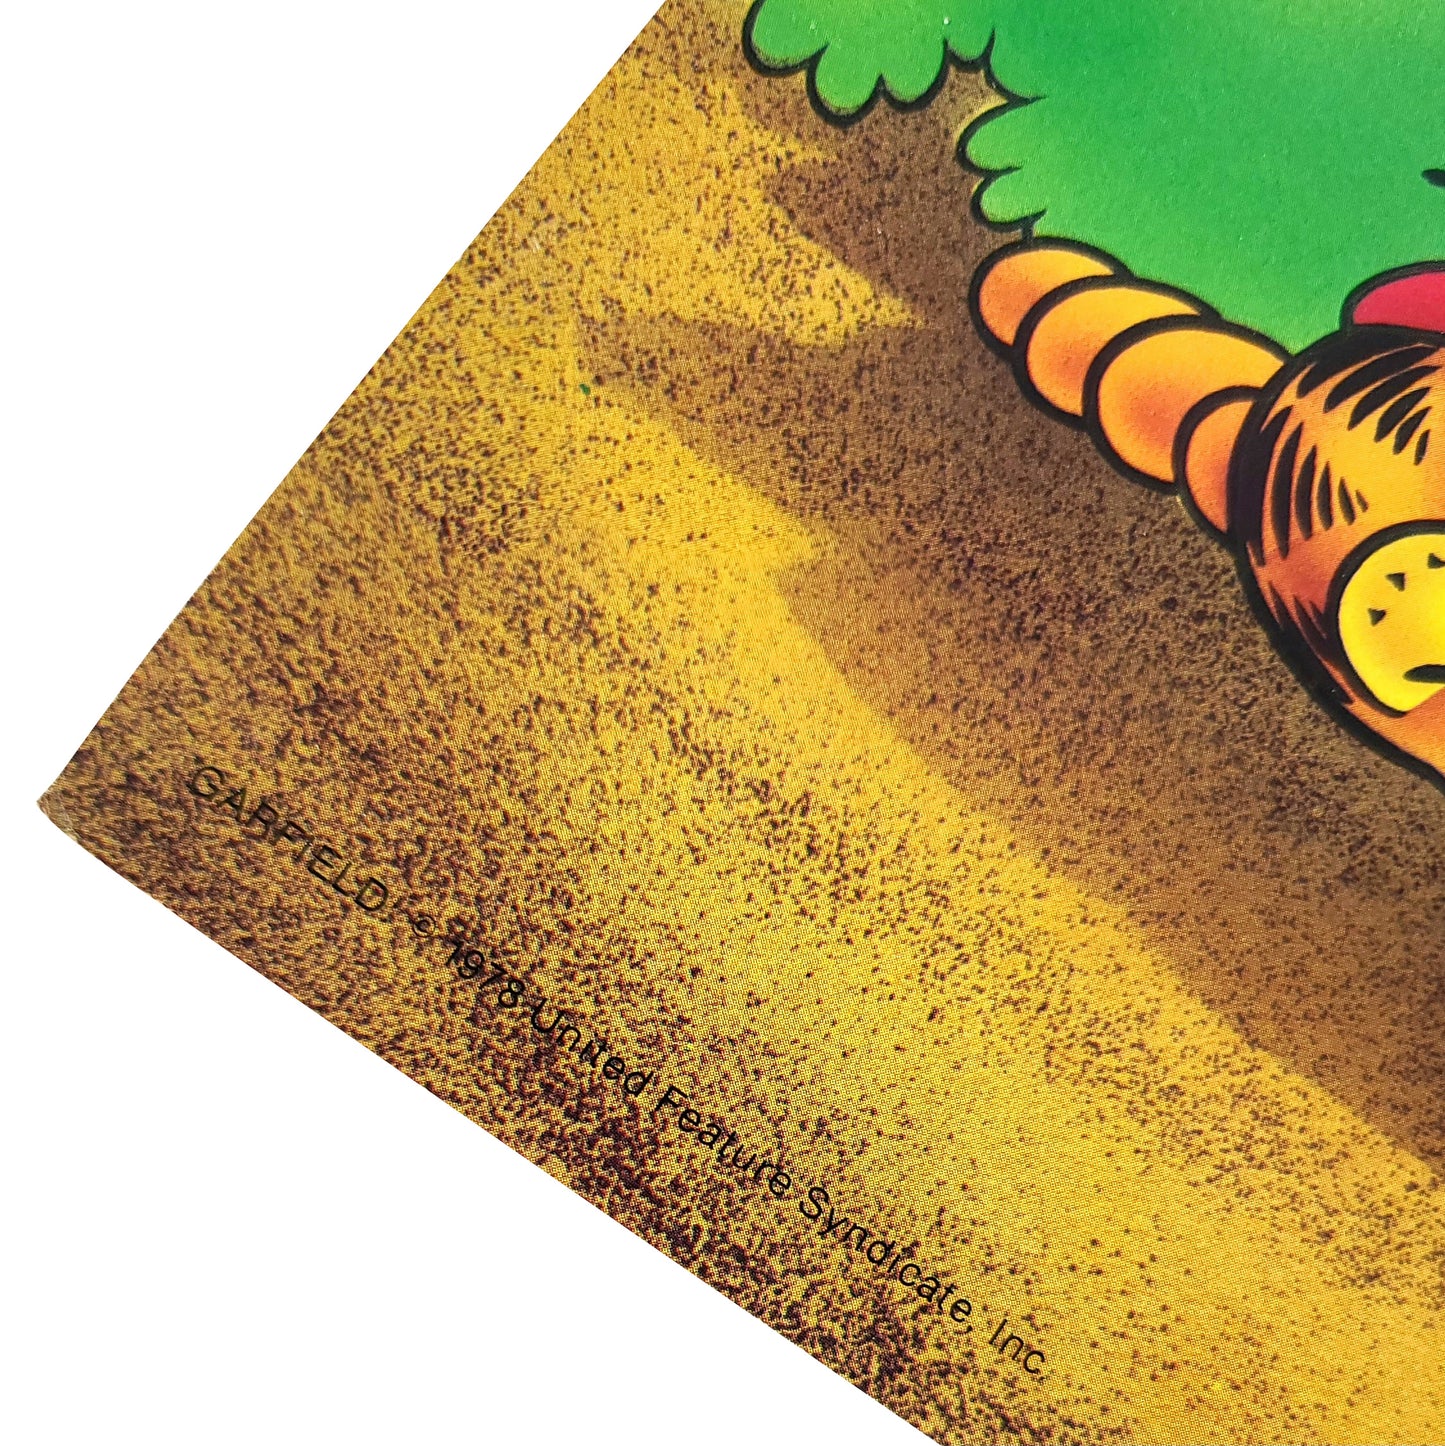 1978 Garfield 'Shove It' Poster